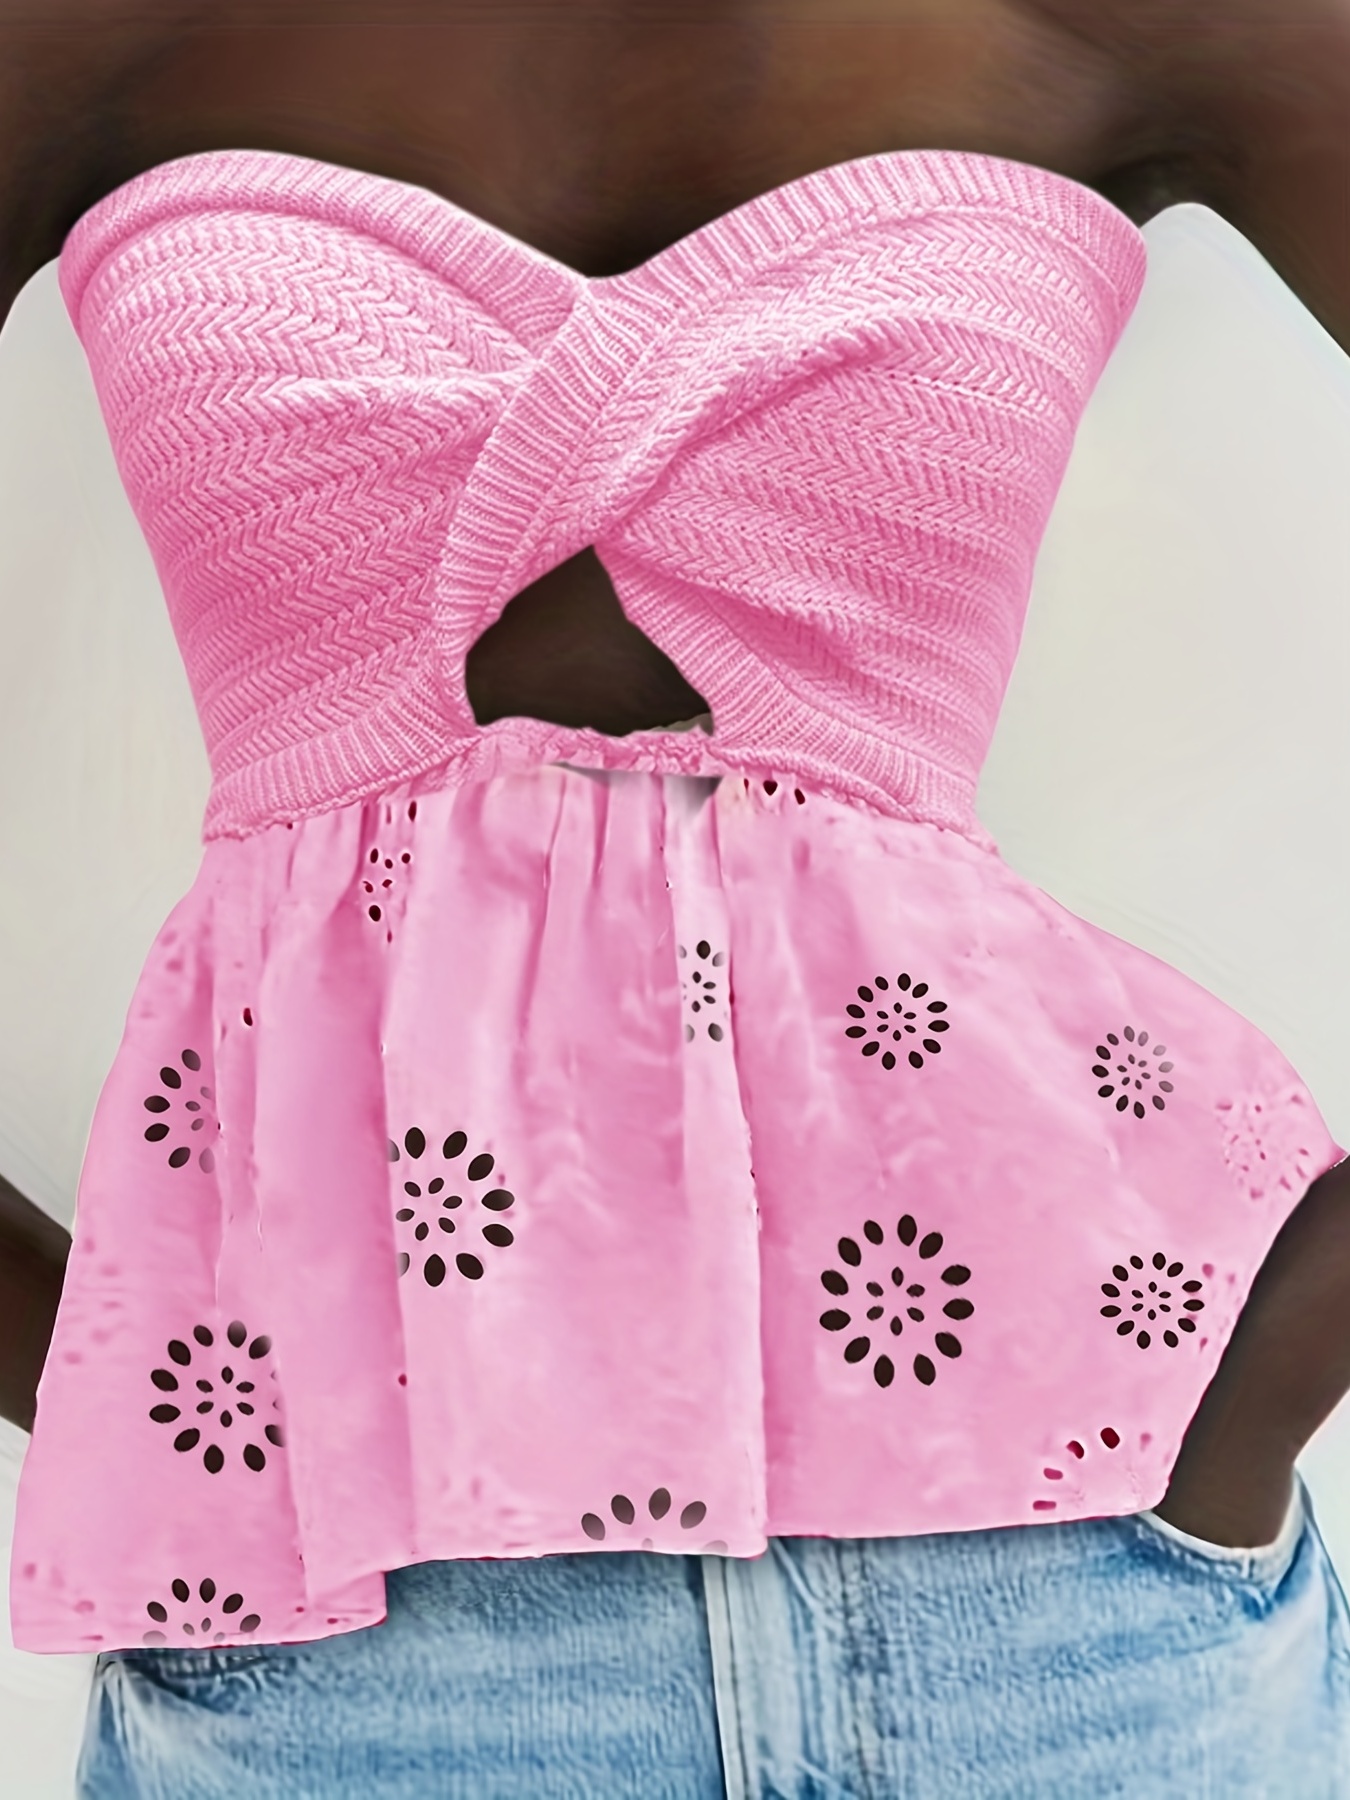 Rose Pink Bodysuit - Twist-Front Top - Women's Tops - Knit Top - Lulus